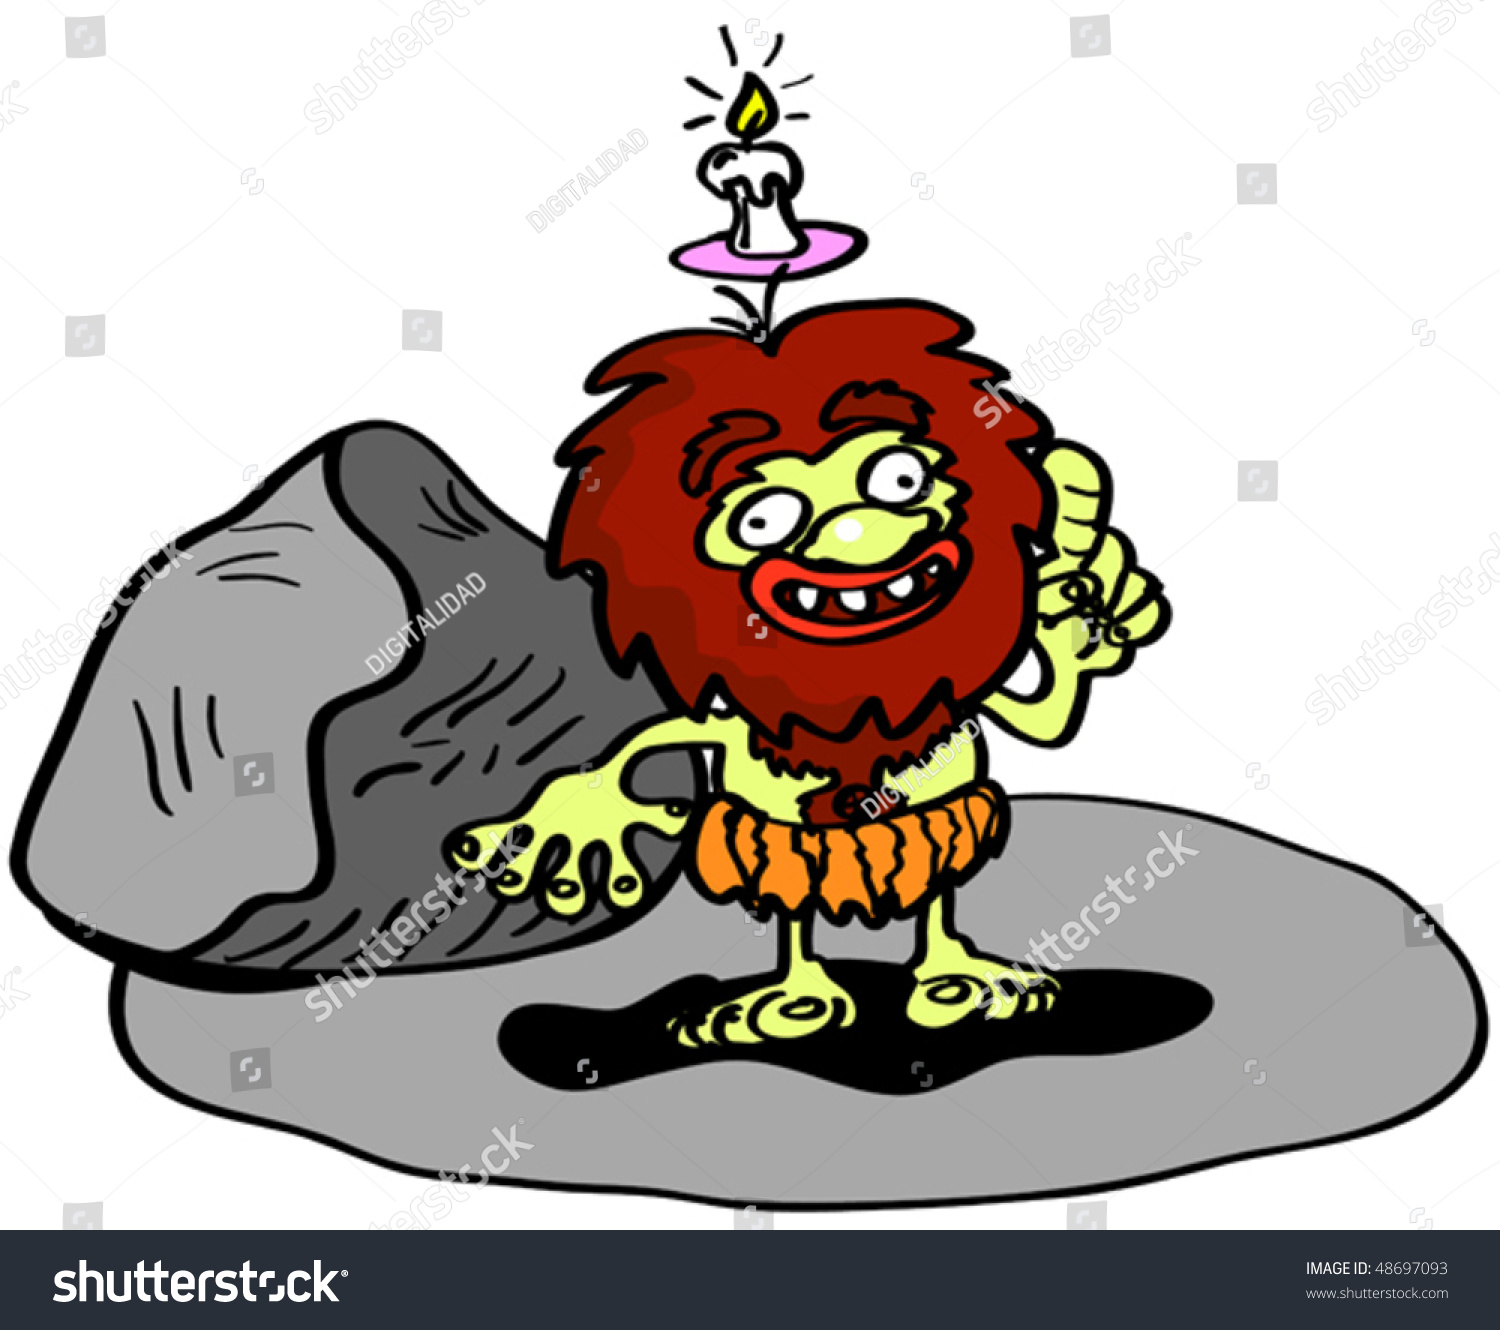 A Caveman Having A Great (For Him) Idea Stock Vector Illustration ...